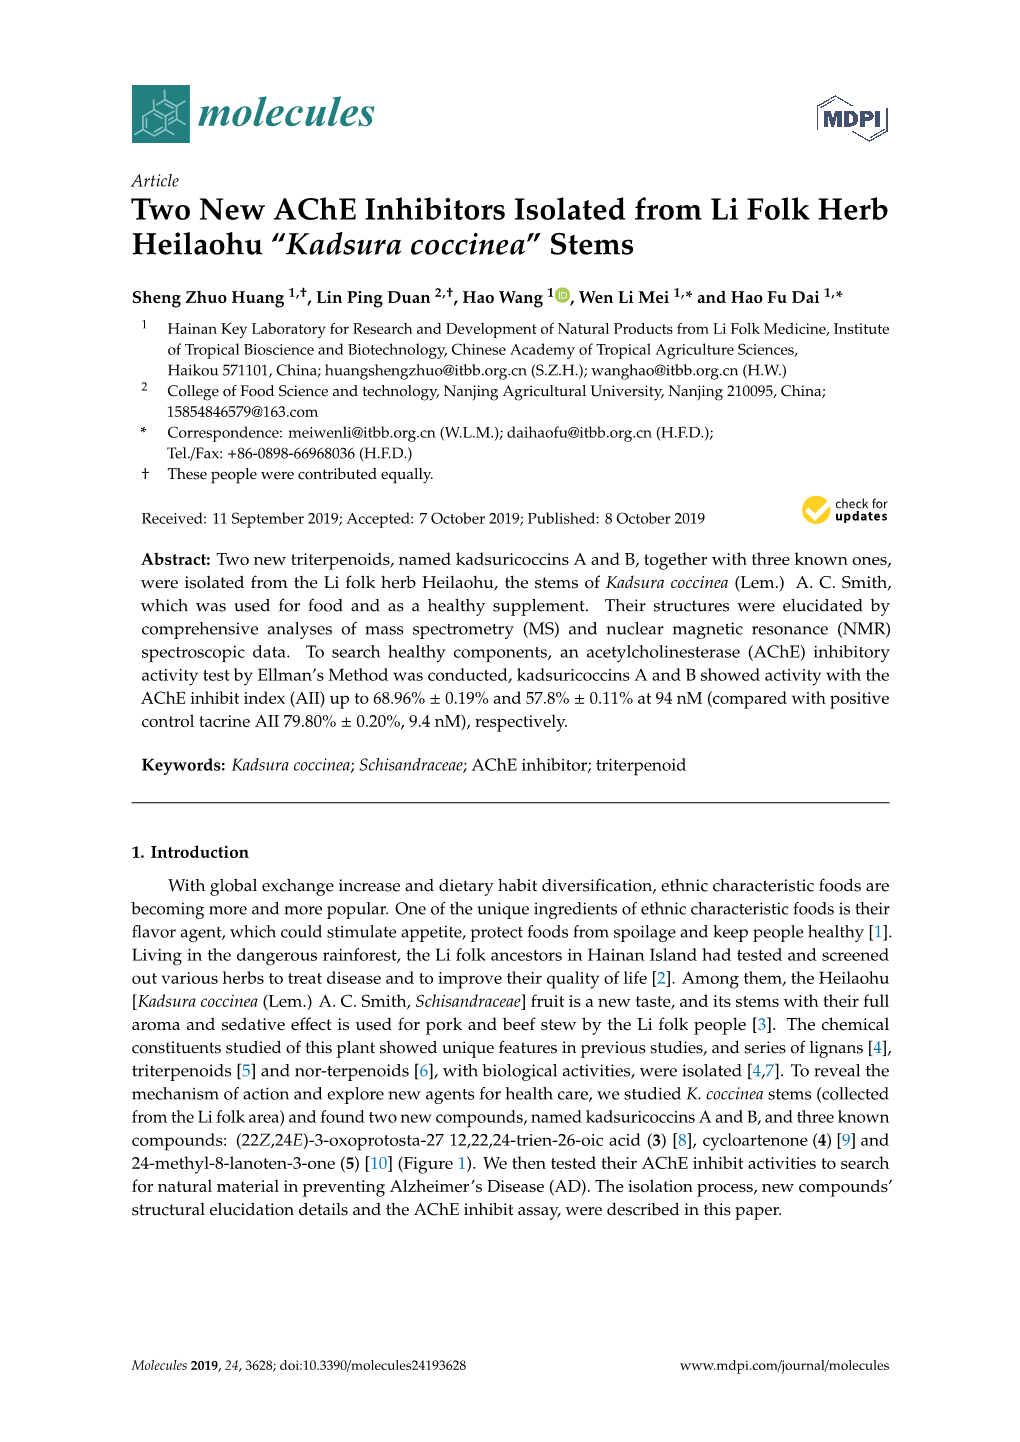 Two New Ache Inhibitors Isolated from Li Folk Herb Heilaohu “Kadsura Coccinea” Stems